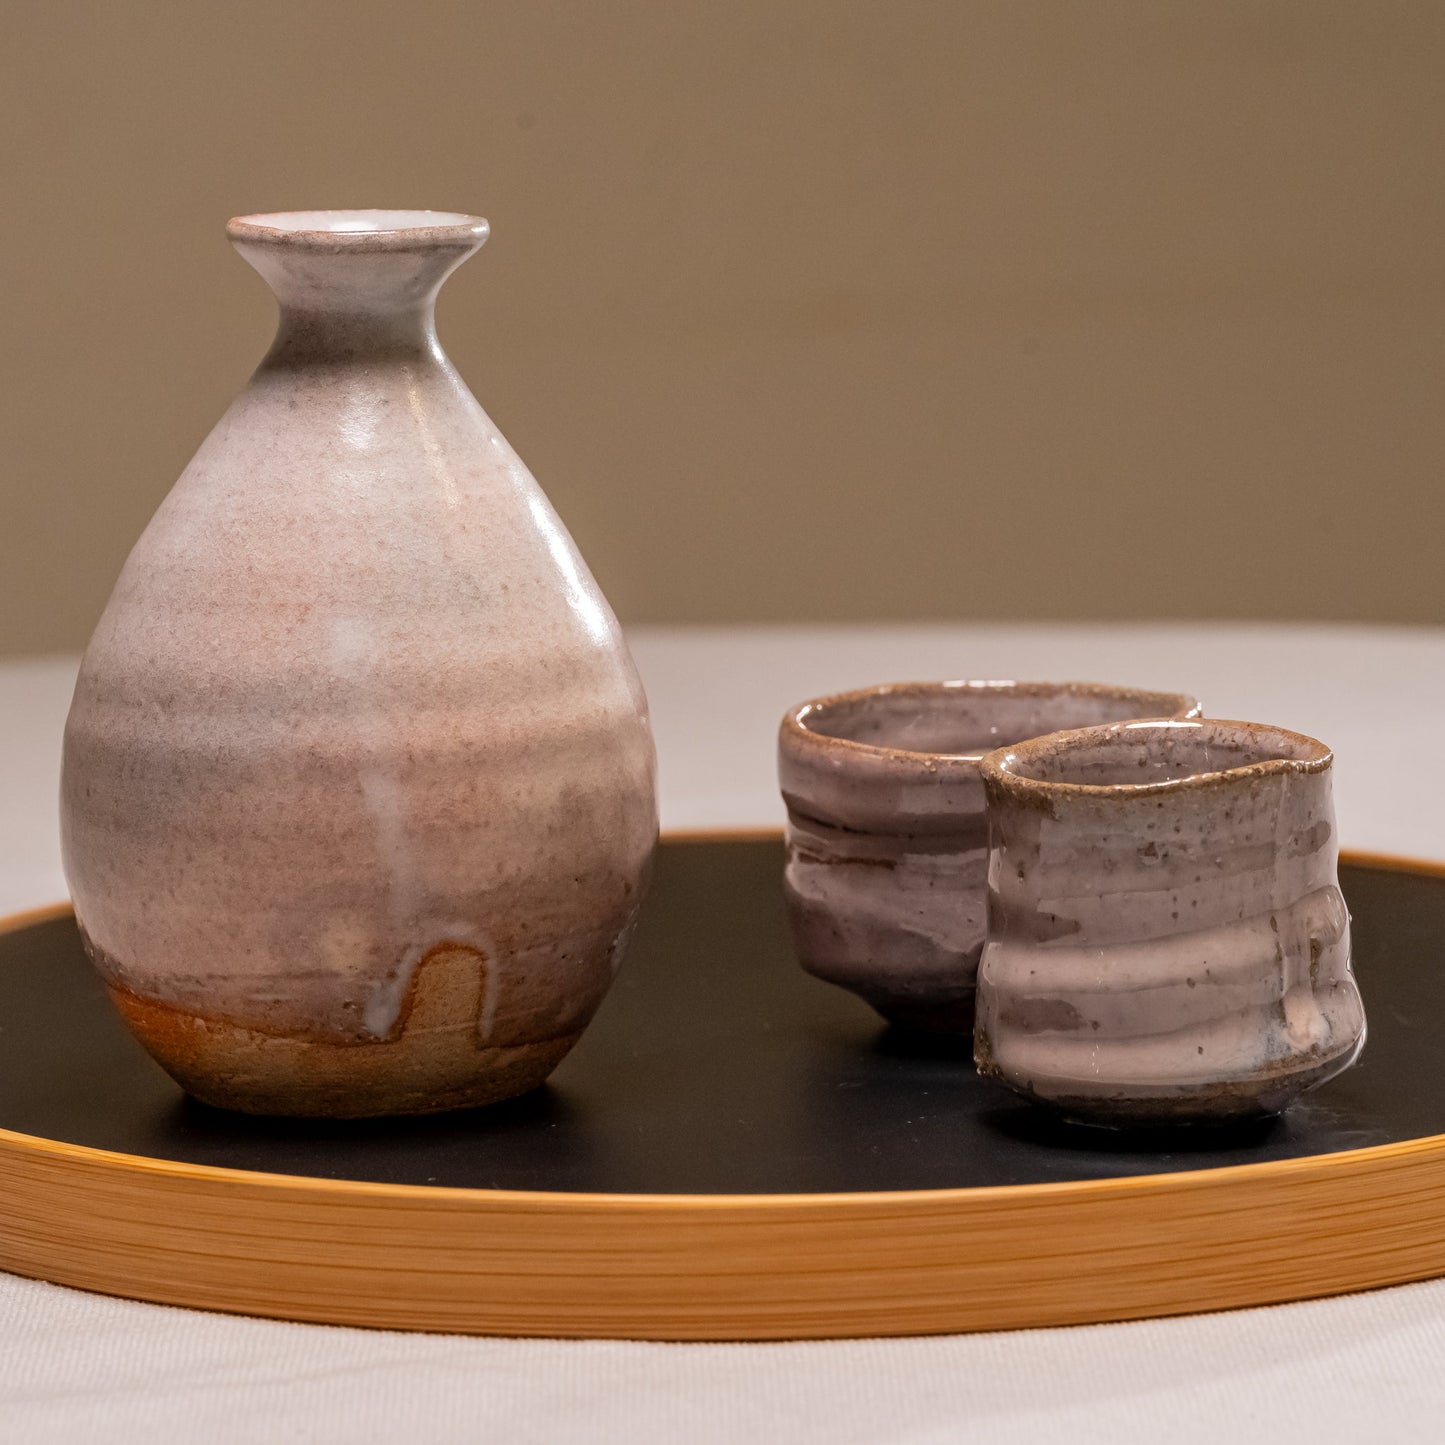 A Japanese ceramic sake set on a bamboo tray